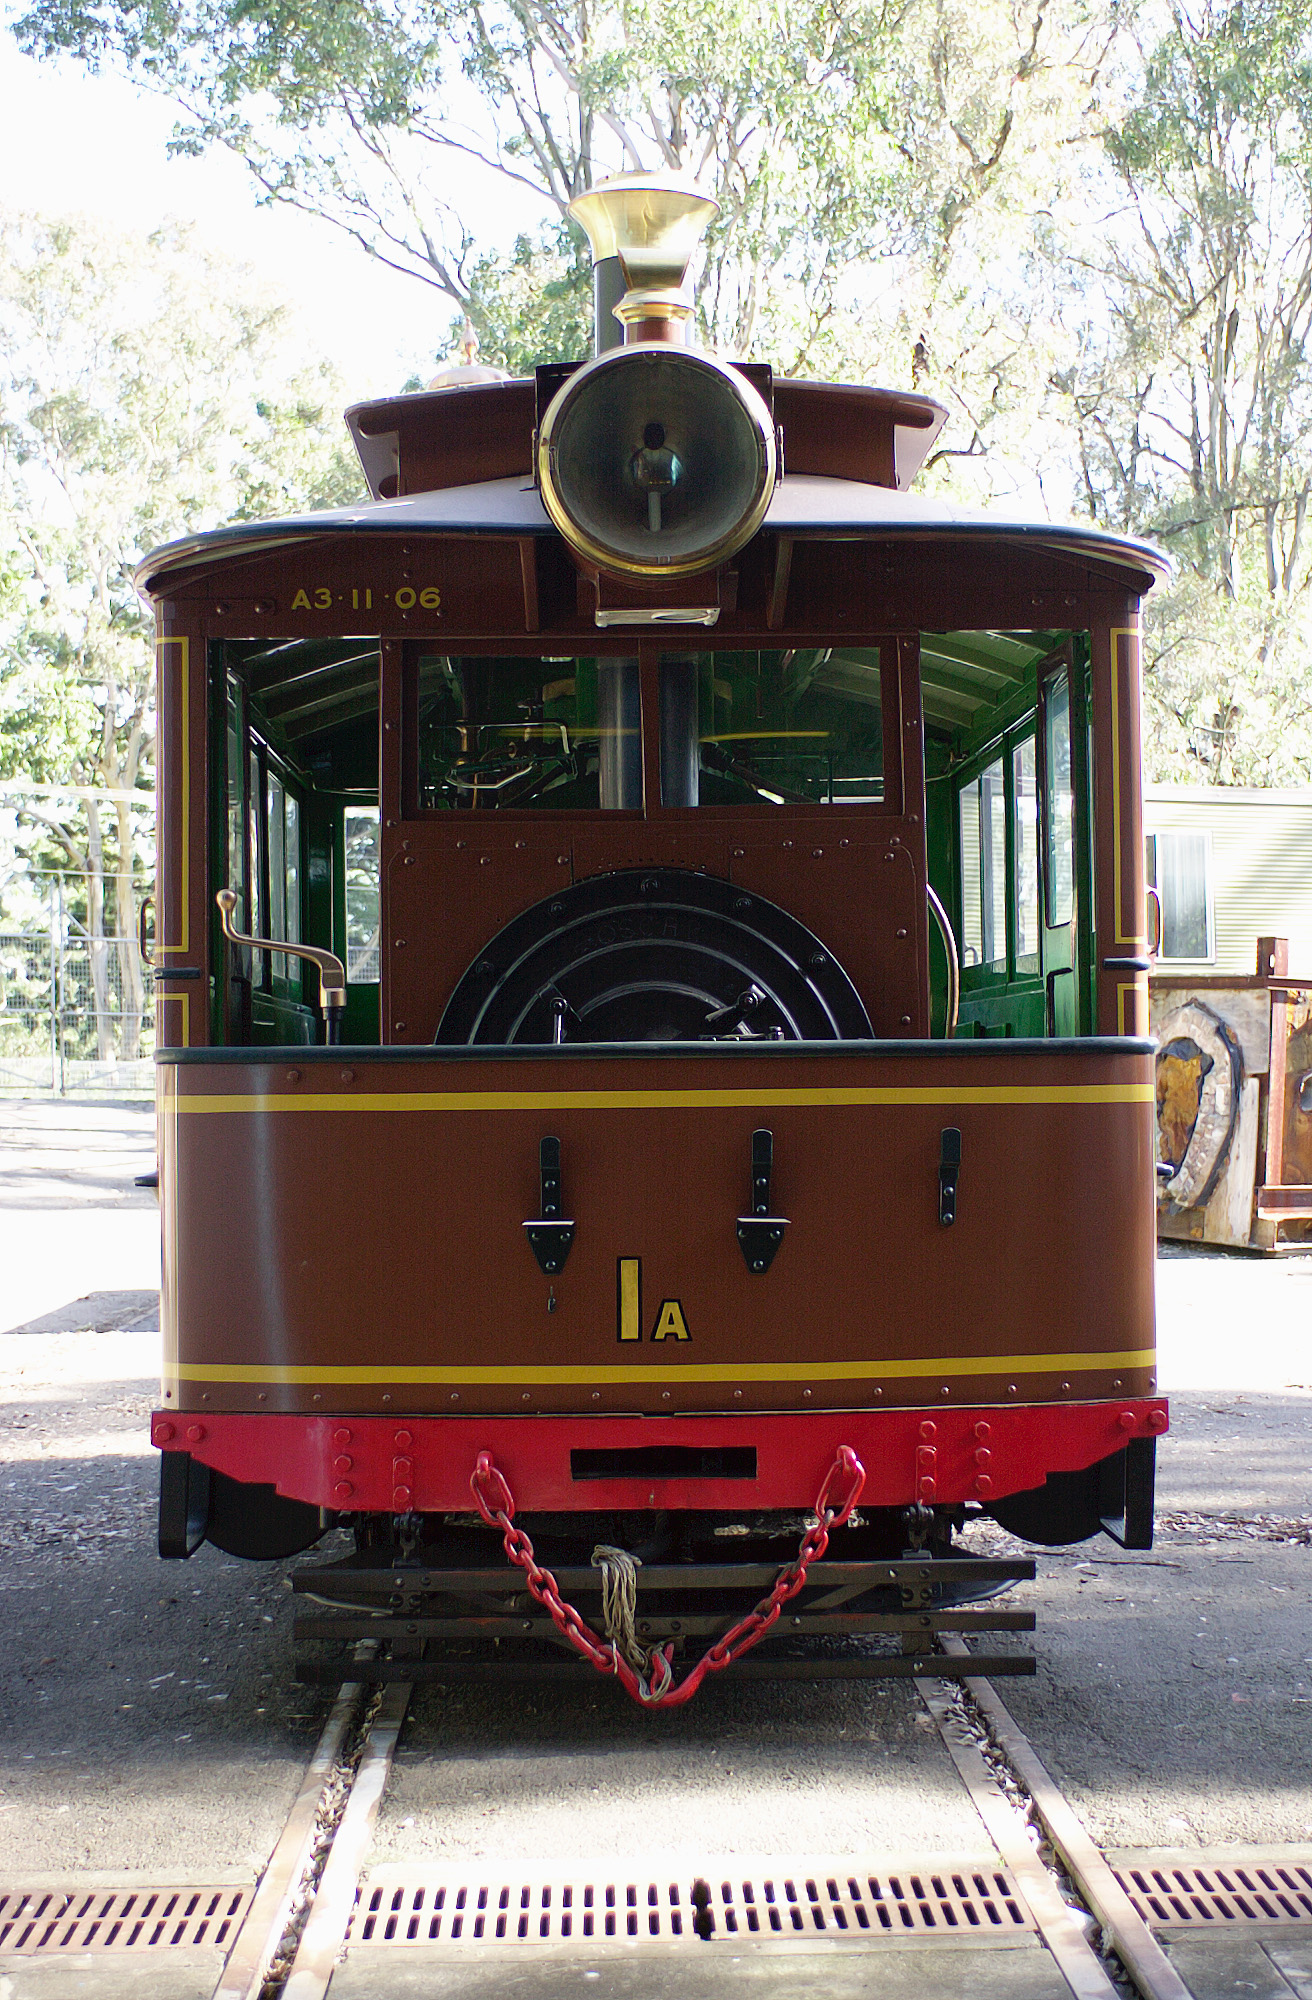 Baldwin steam tram No.1A, 1879